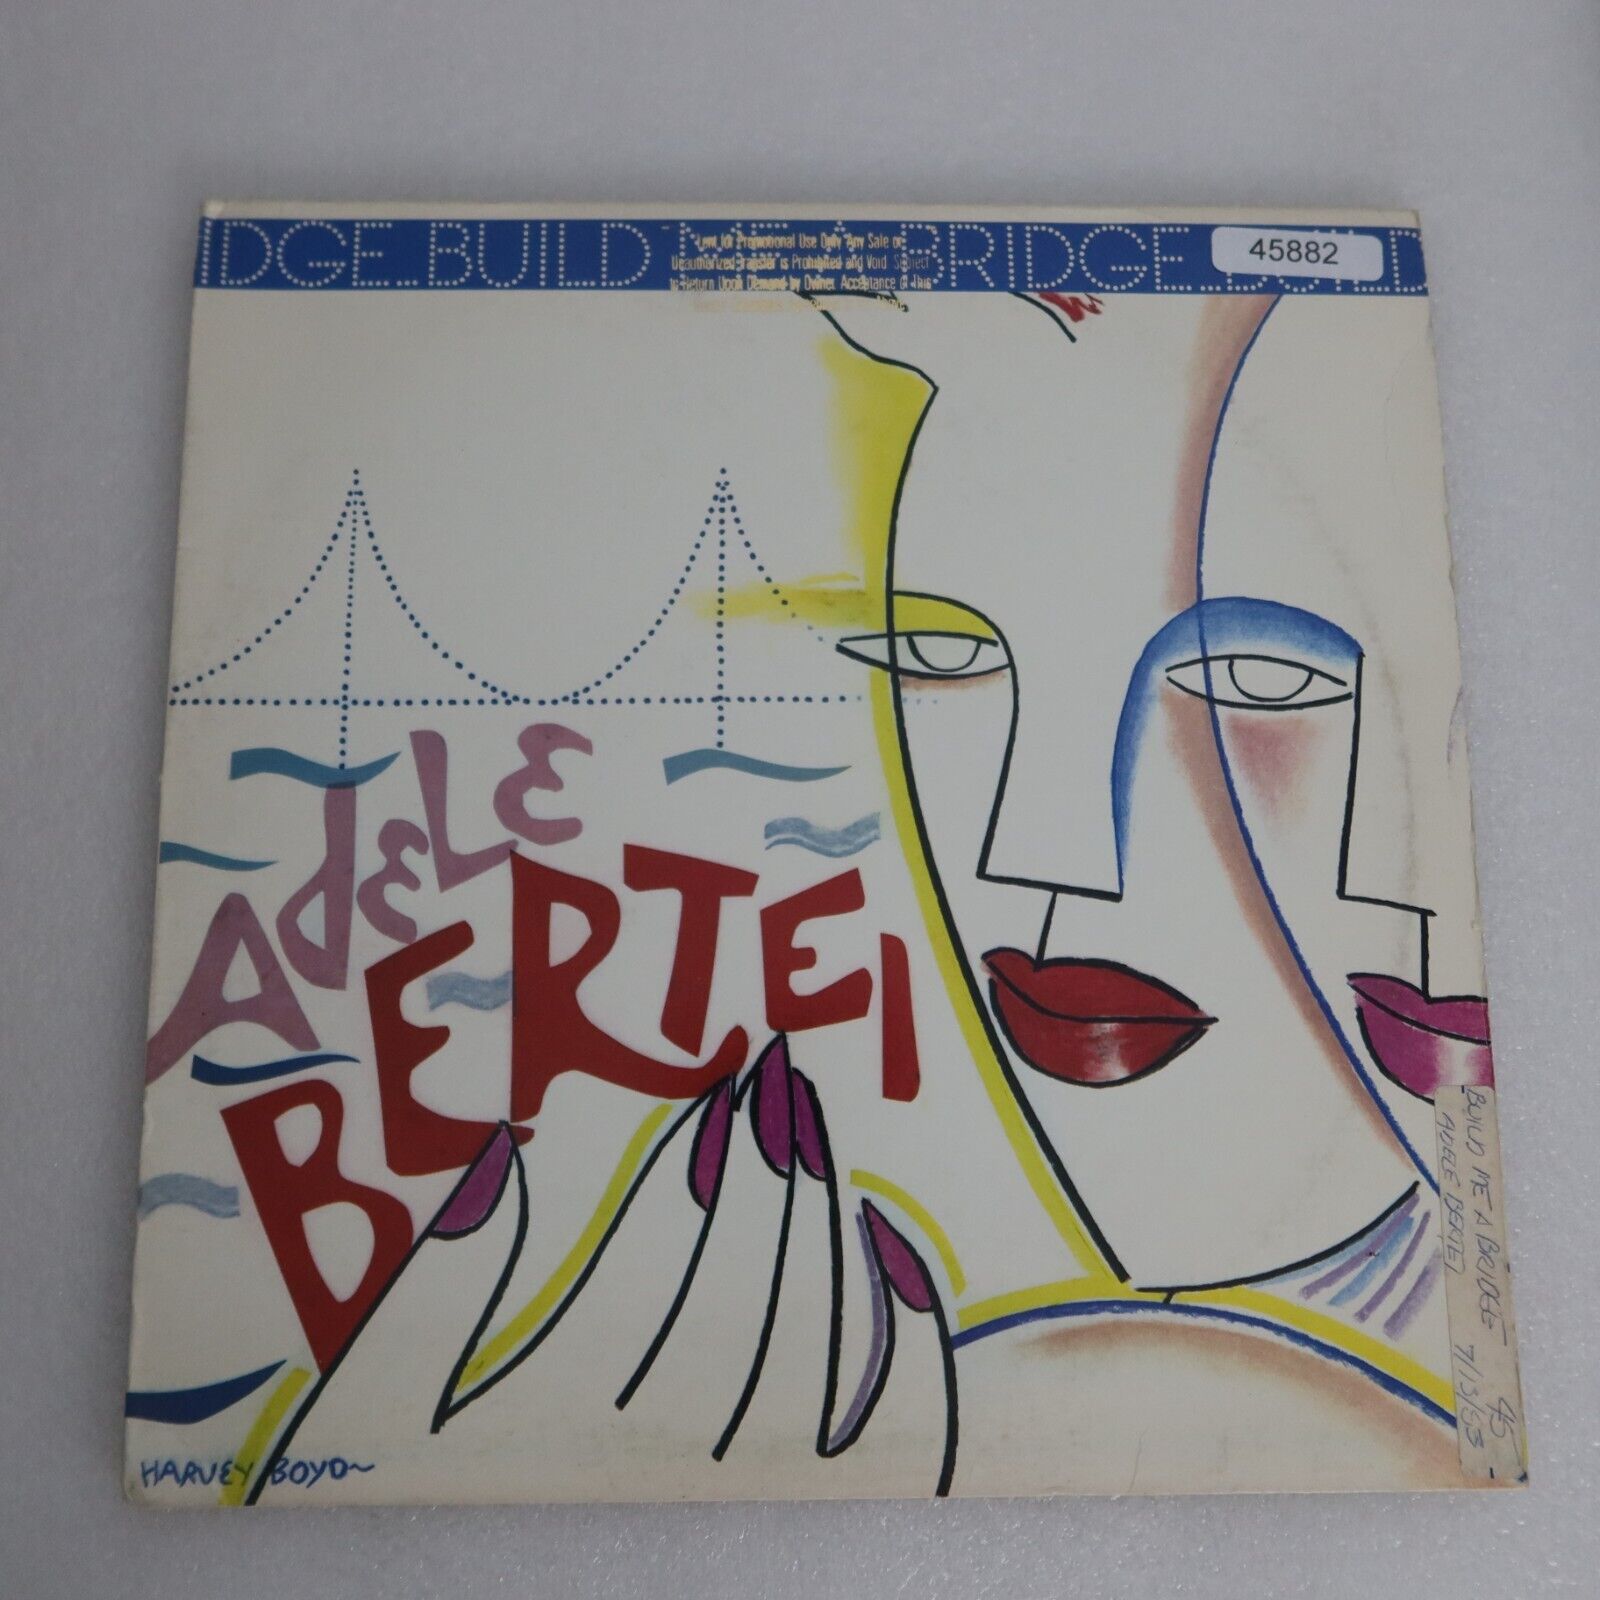 Adele Bertei Build Me A Bridge PROMO SINGLE Vinyl Record Album